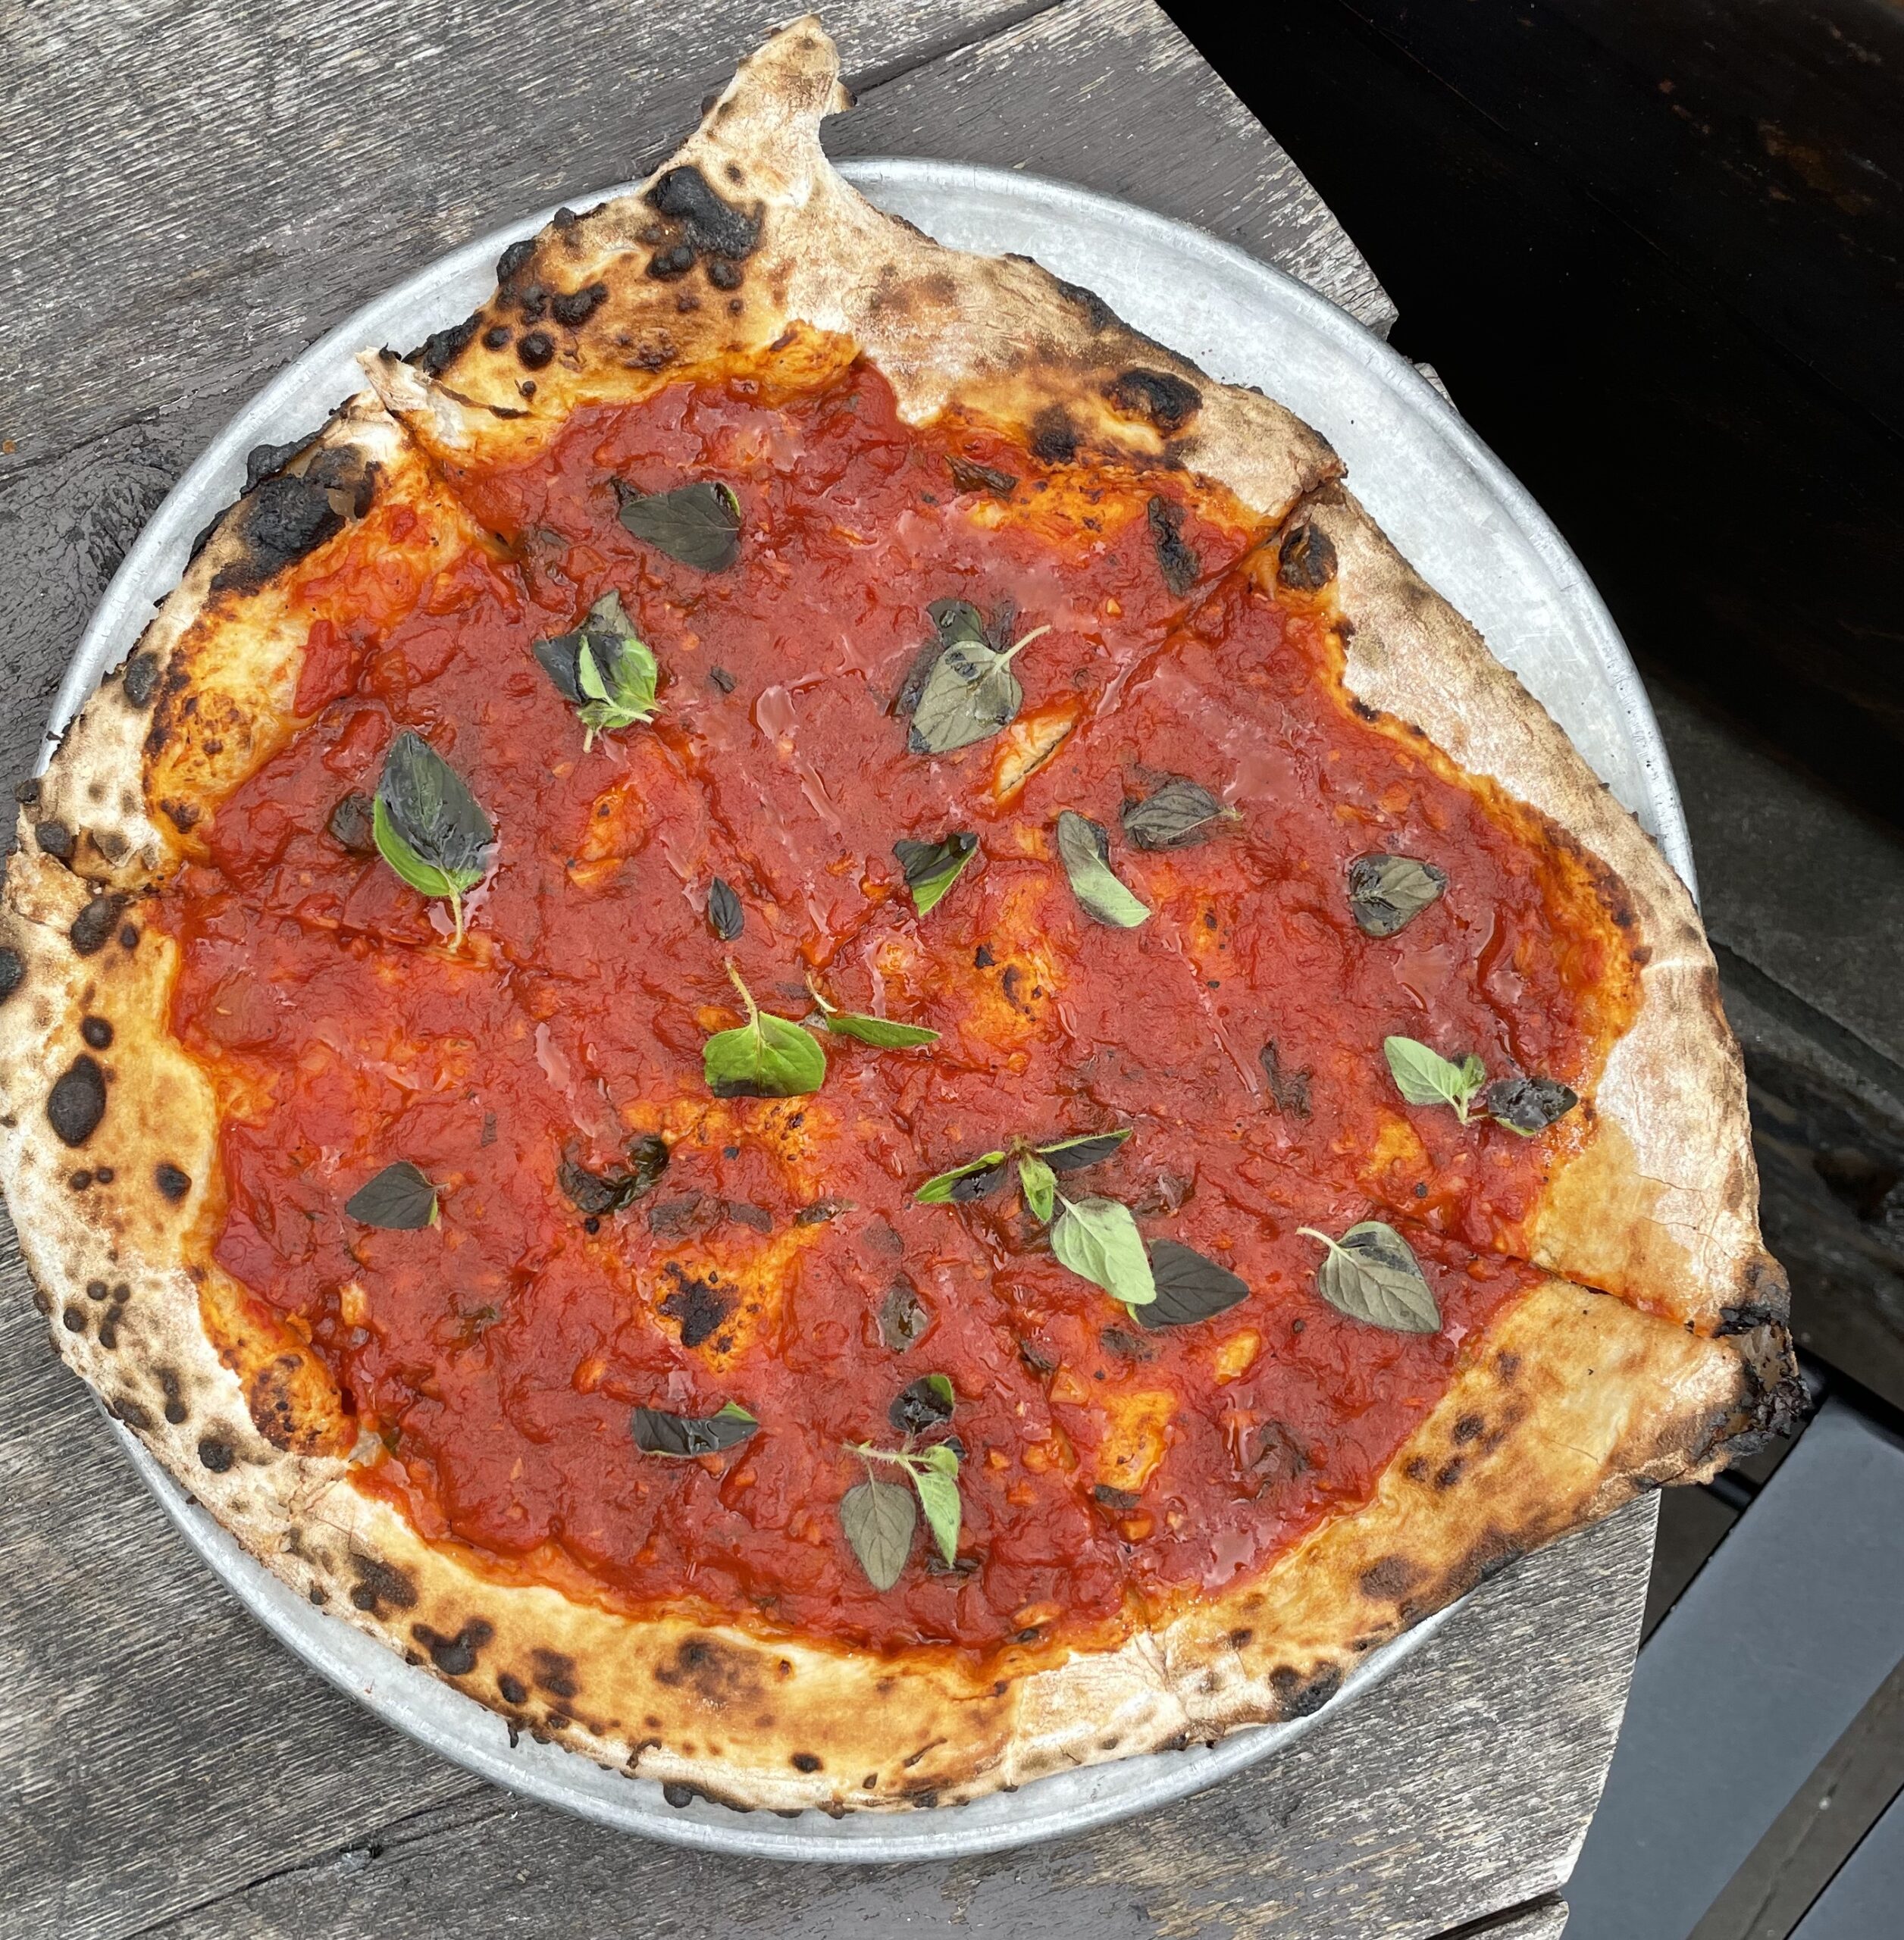 Rustic Tomato Pie, vegan pizza in Philadelphia, wood-fired pizza, slow cooked marinara sauce + fresh oregano + extra virgin olive oil